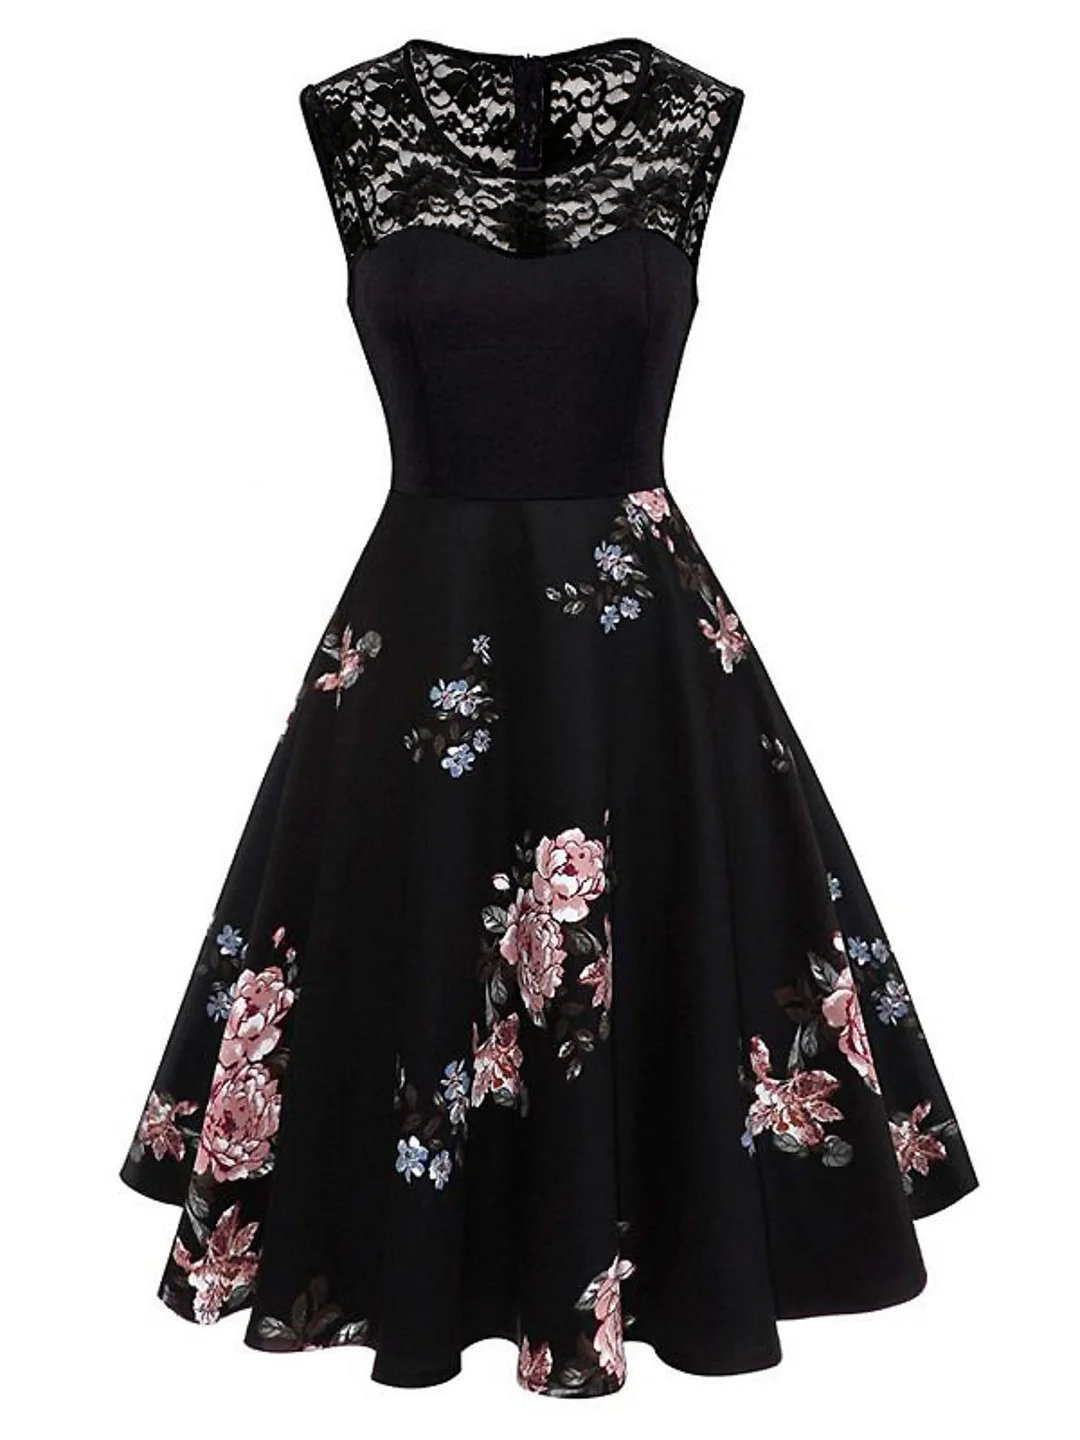 Black 1950s Floral Lace Swing Dress